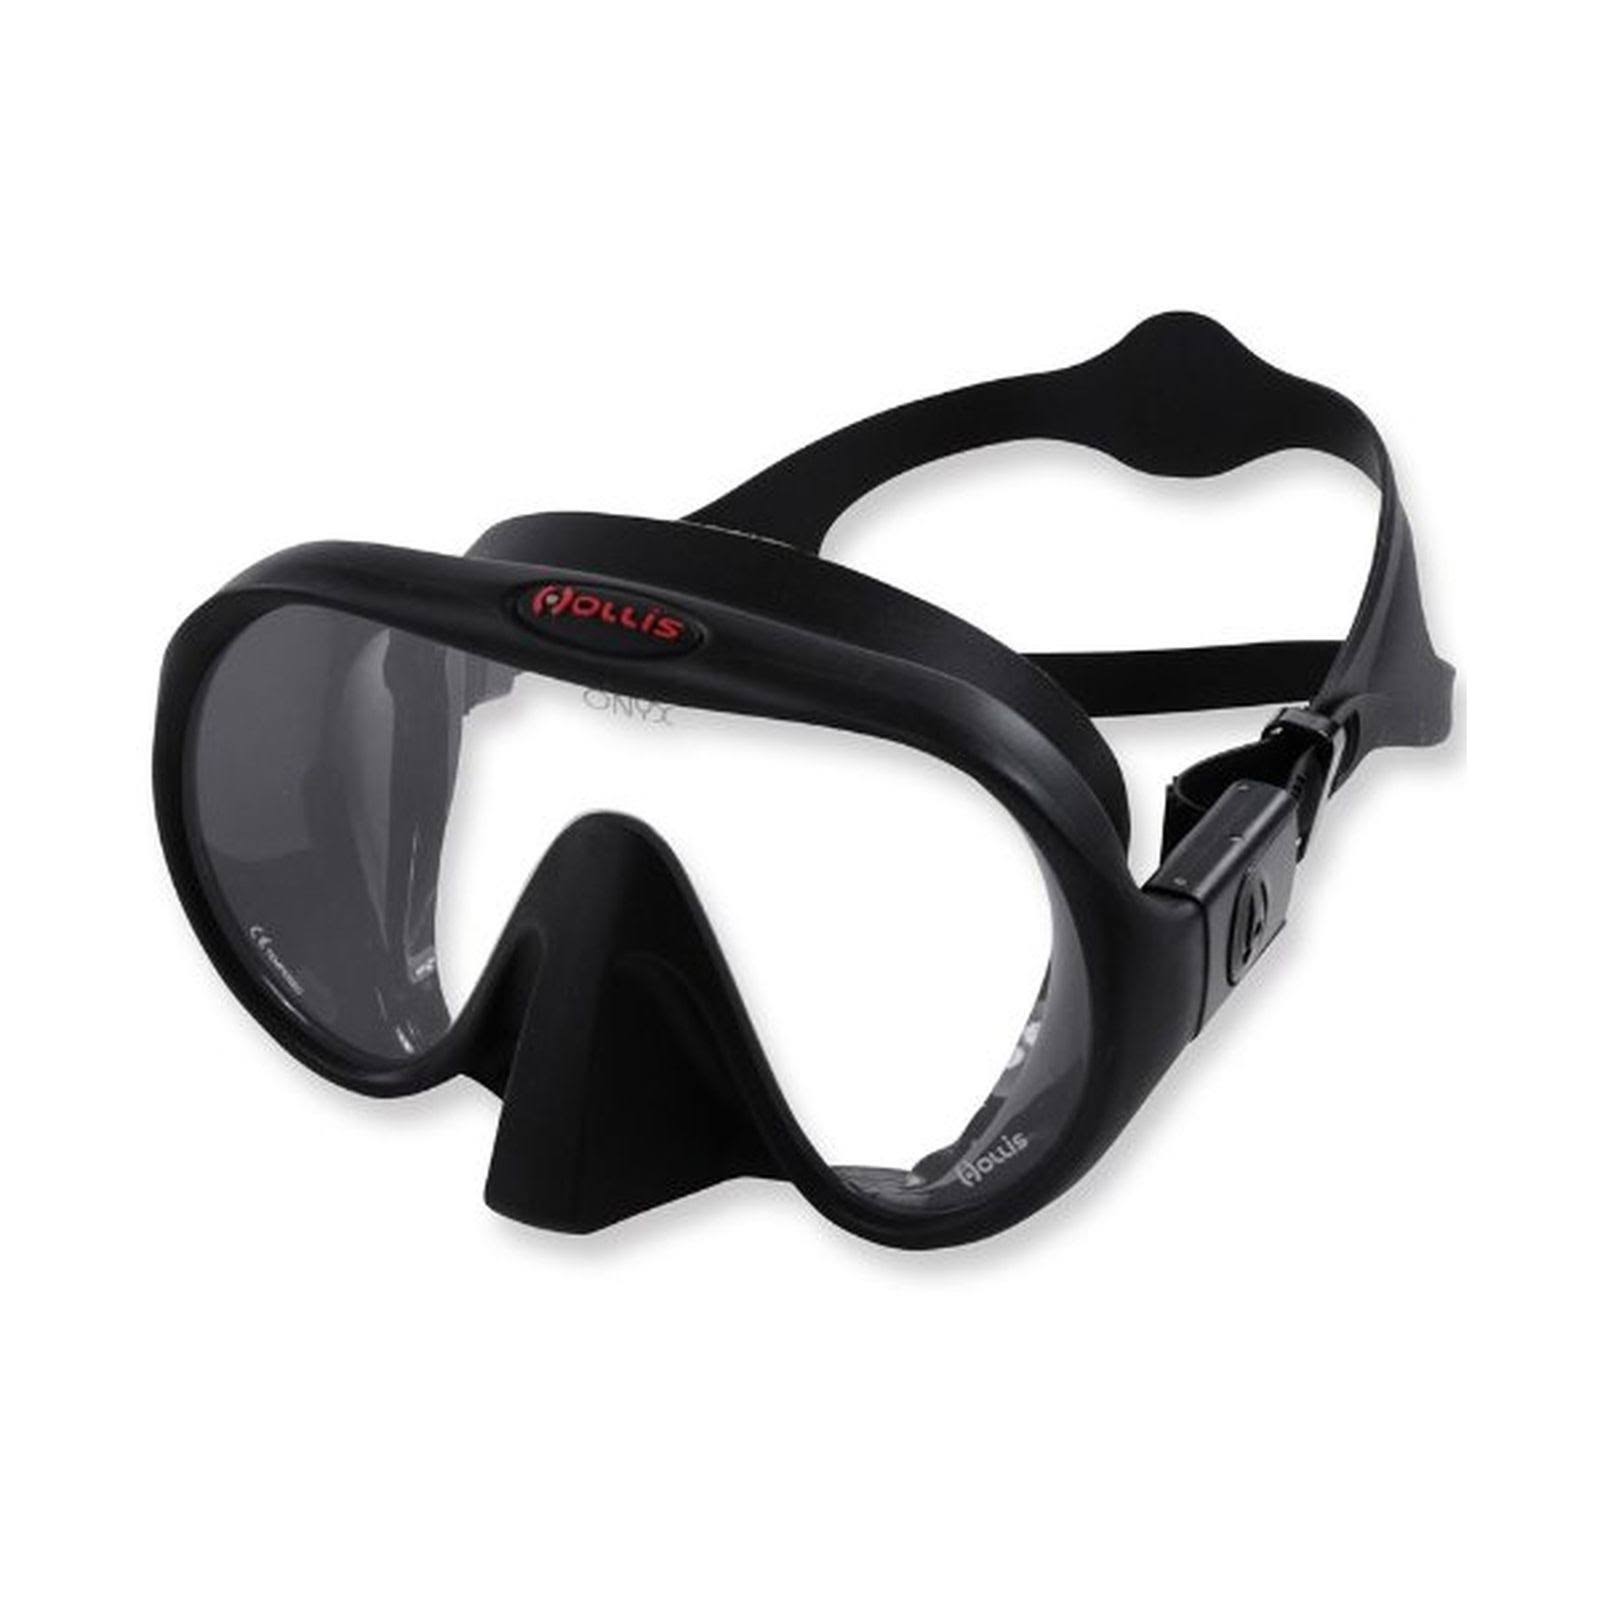 Hollis M1 Frameless Technical Scuba Diving and Snorkeling Mask